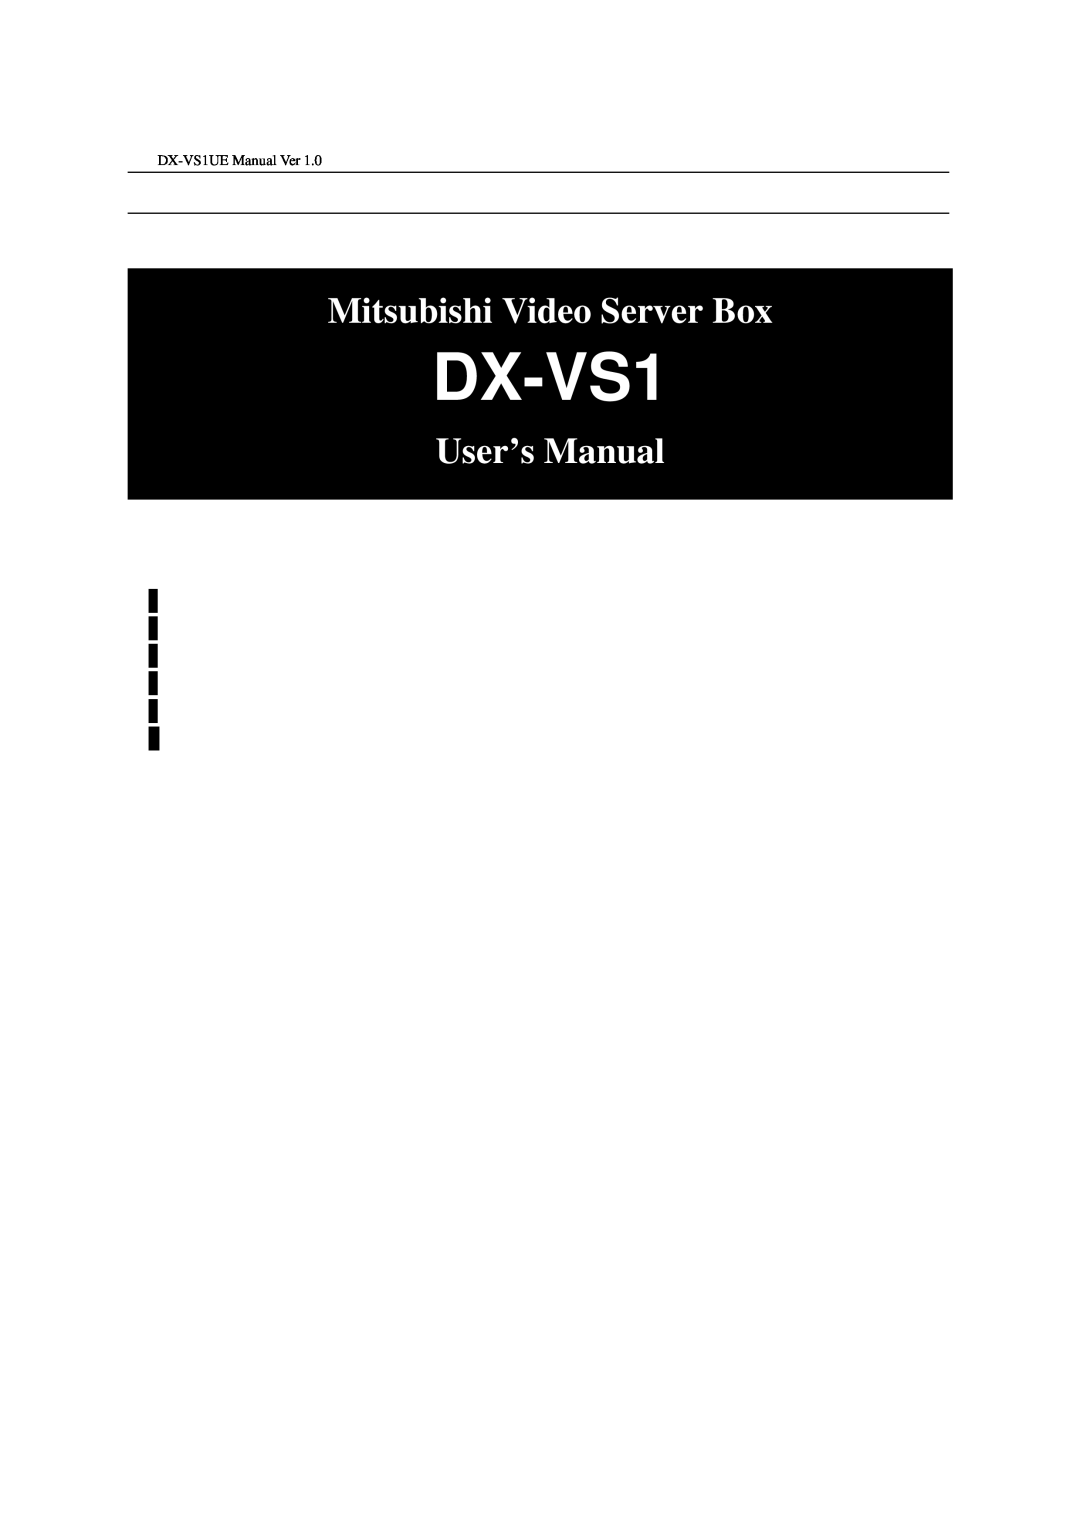 Mitsubishi Electronics user manual Mitsubishi Video Server Box, User’s Manual, DX-VS1UE Manual Ver 